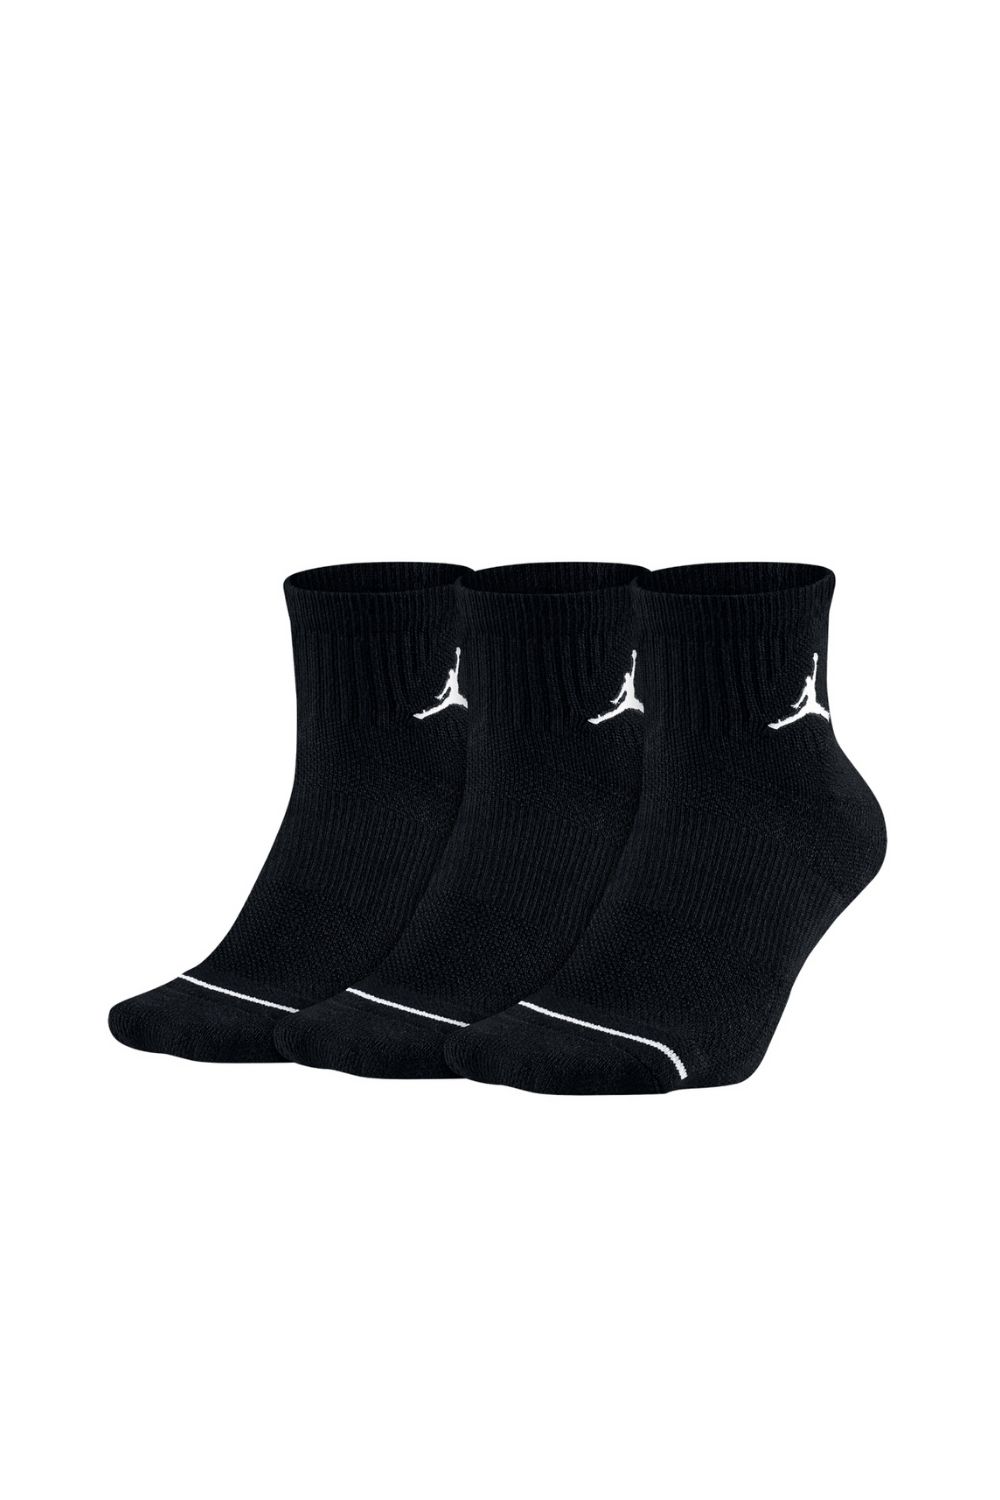 NIKE - Σετ unisex Nike JORDAN EVRY MAX ANKLE μαύρες Γυναικεία/Αξεσουάρ/Κάλτσες